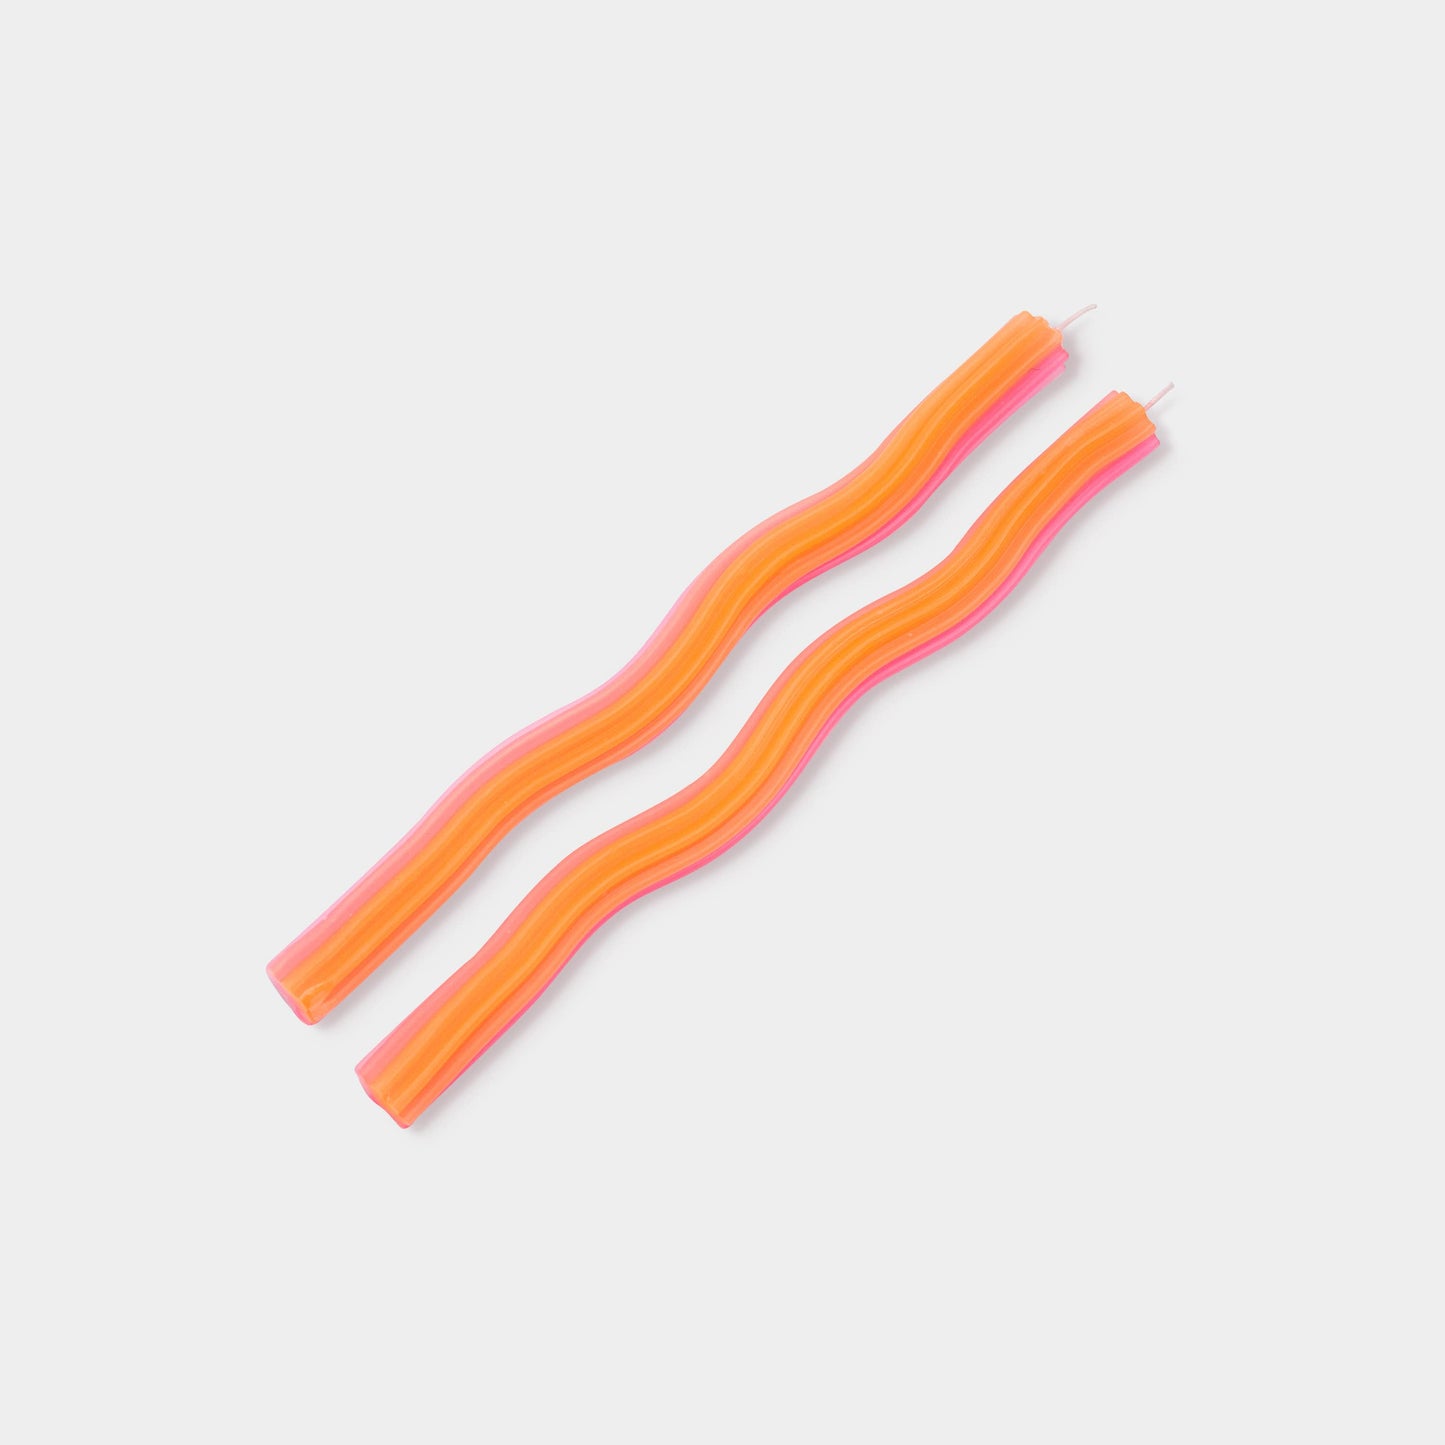 Wiggle Candle Sticks by Lex Pott - Orange (2 pack)